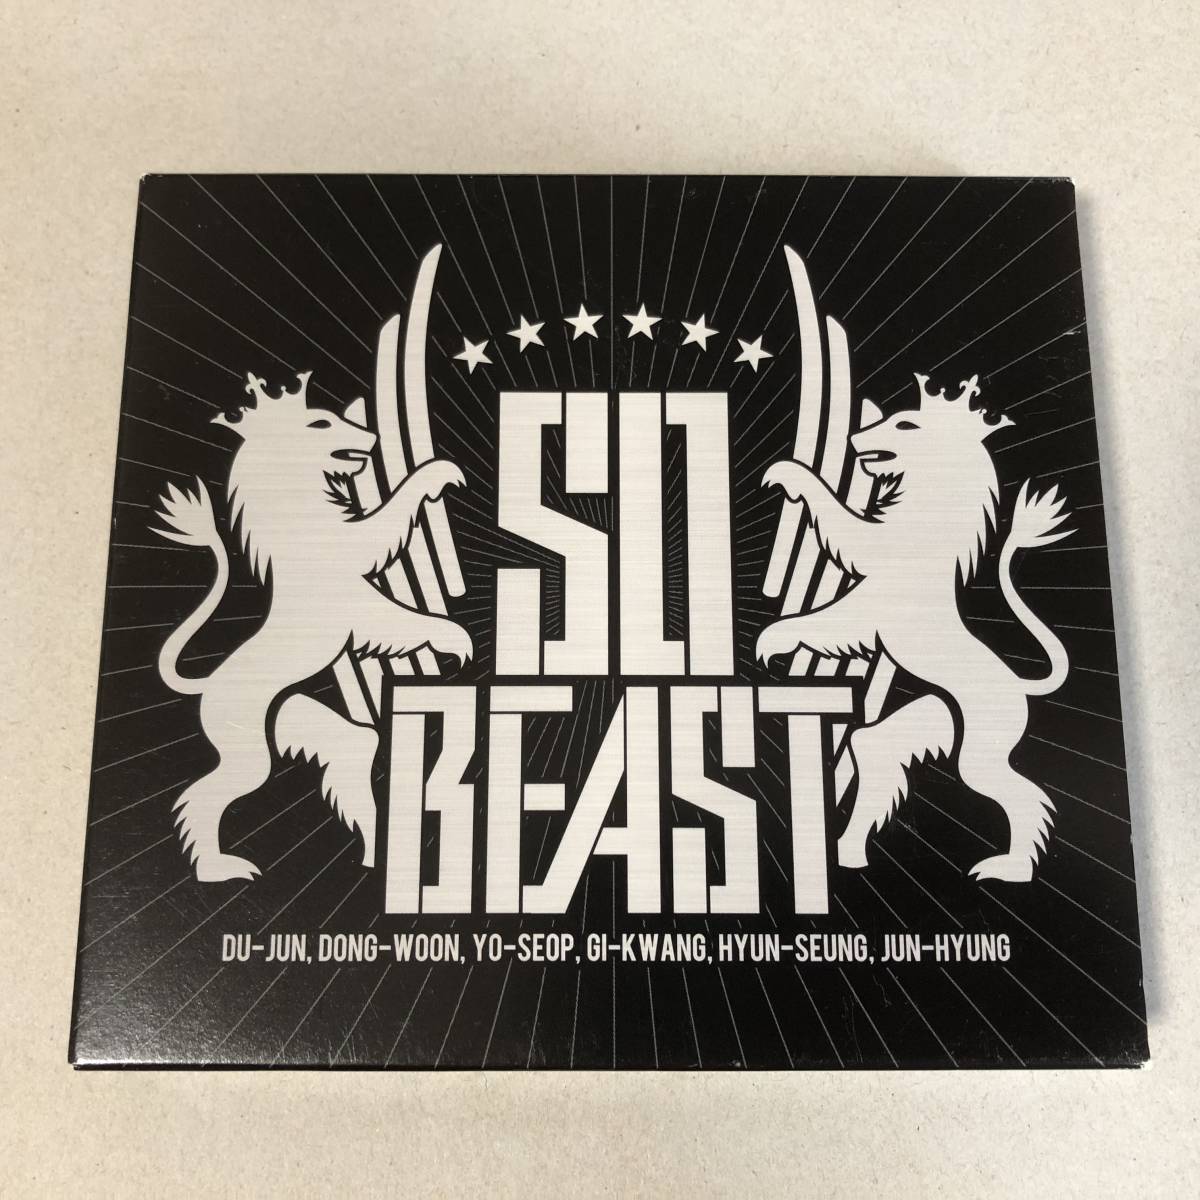 BEAST ビースト - So Beast 国内初回盤 CD＋DVD 韓国 アイドル ポップス K-POP bst687_画像1